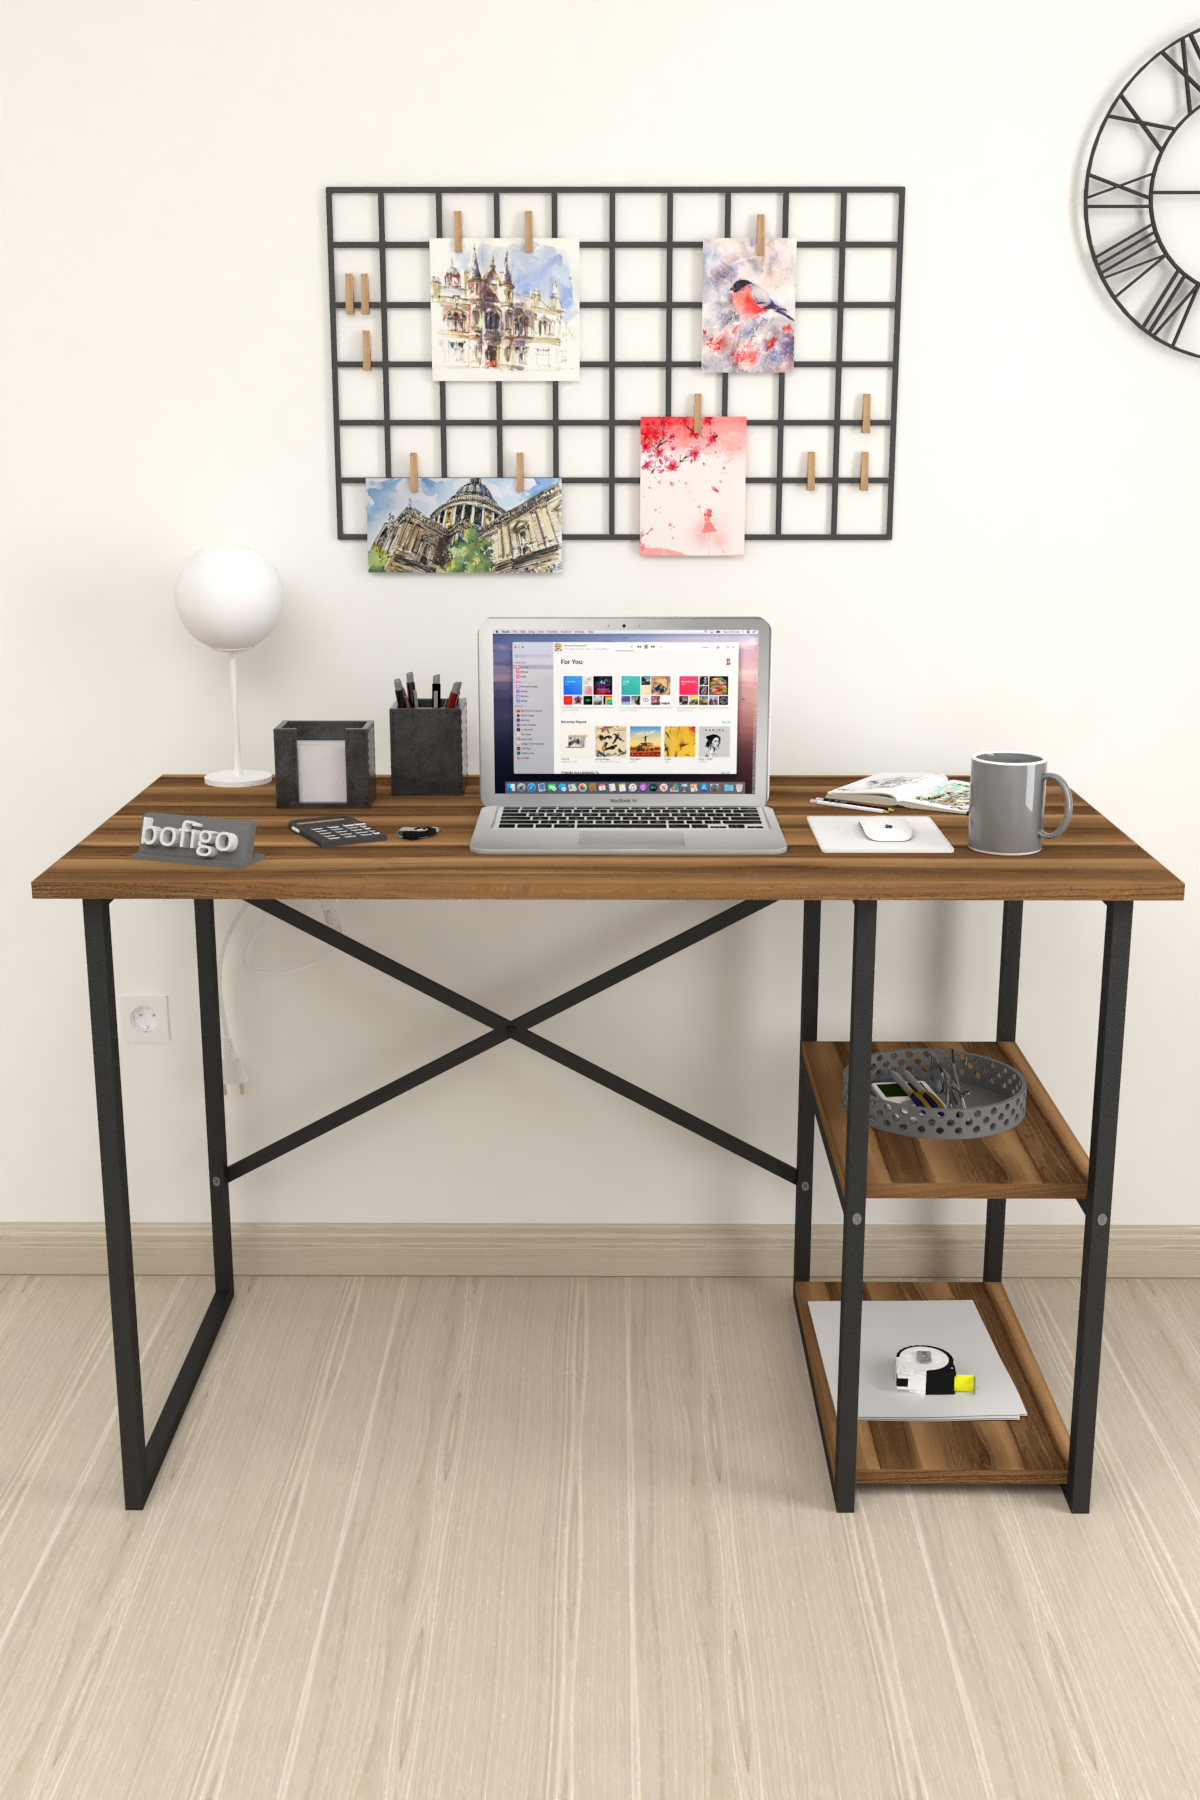 Bofigo 2 Shelf Study Desk 60x120 cm  Walnut